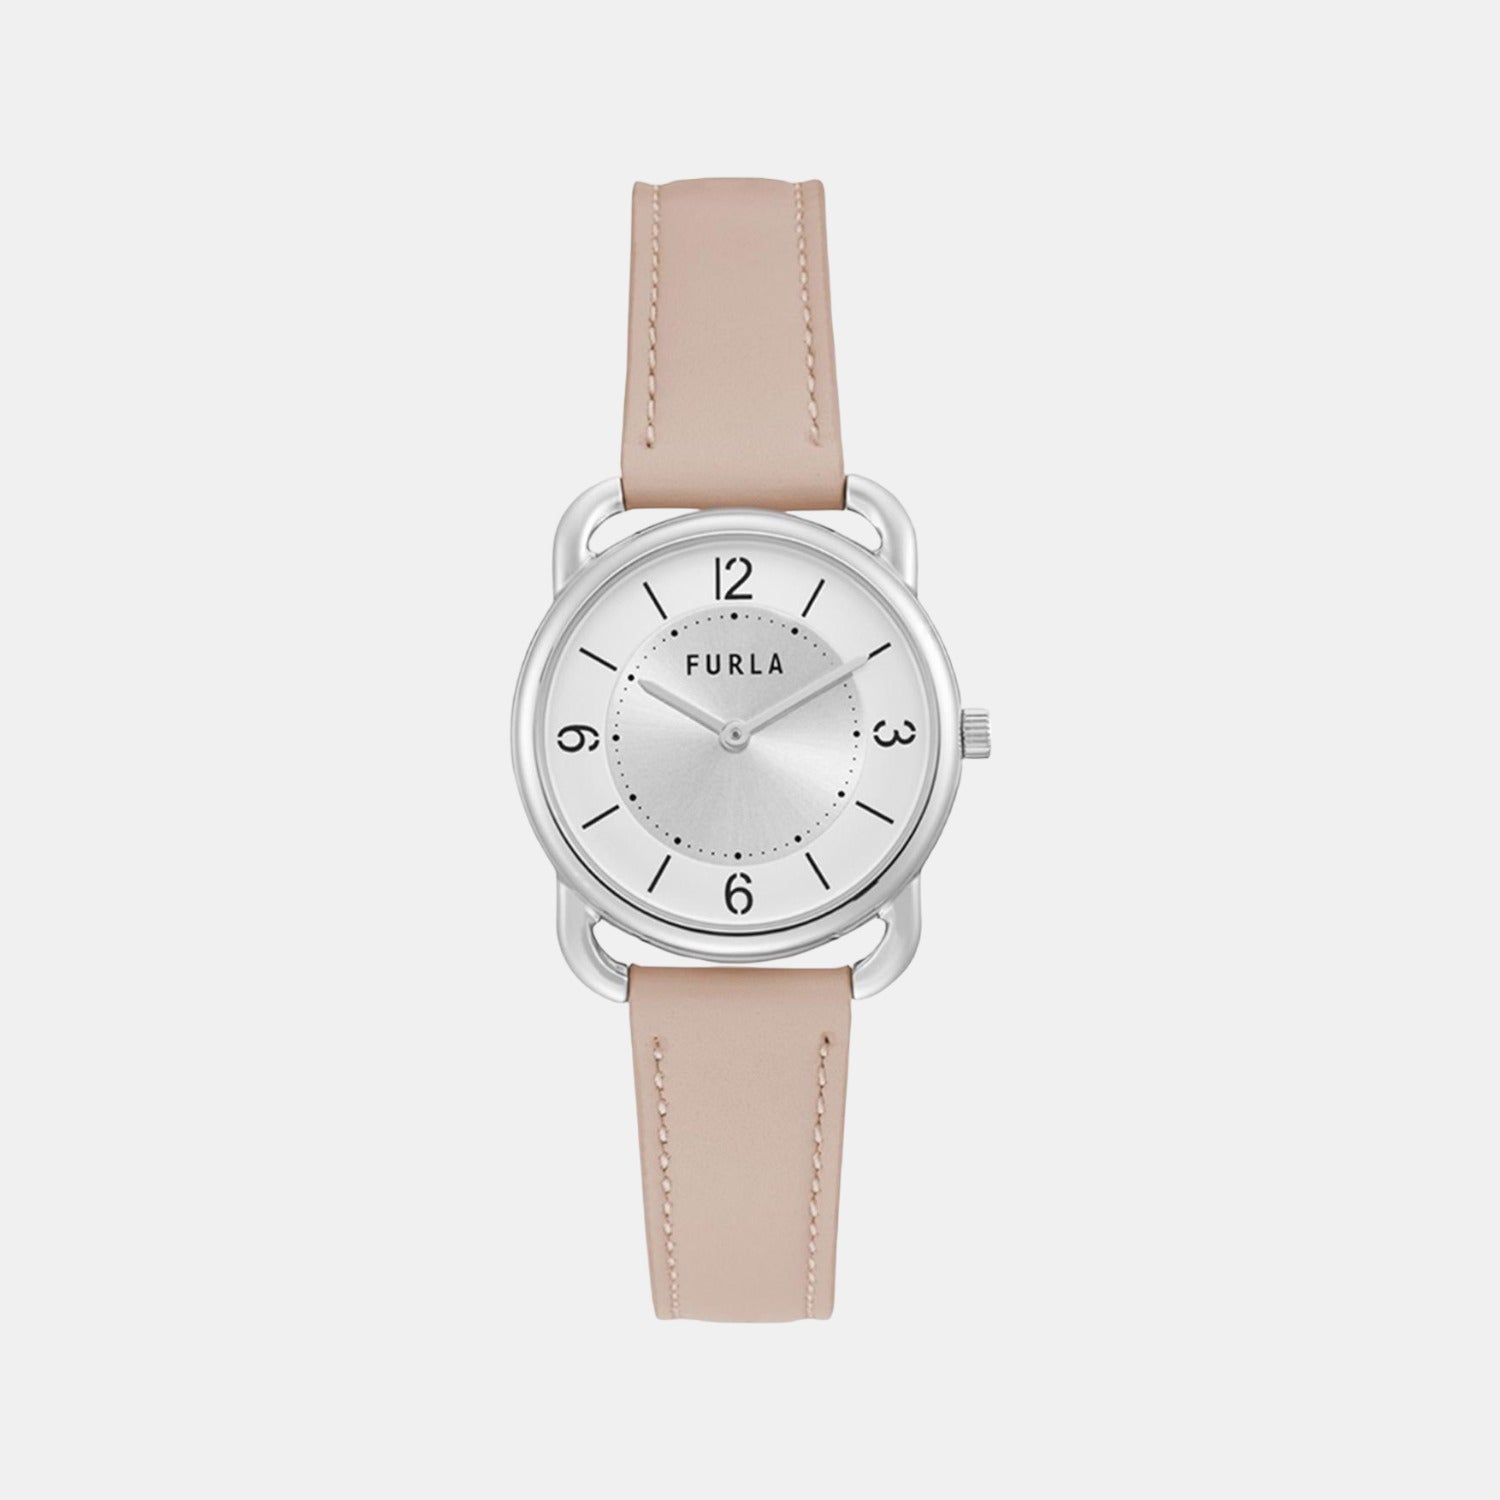 Buy FURLA Watch Ww00018005L5 at Amazon.in